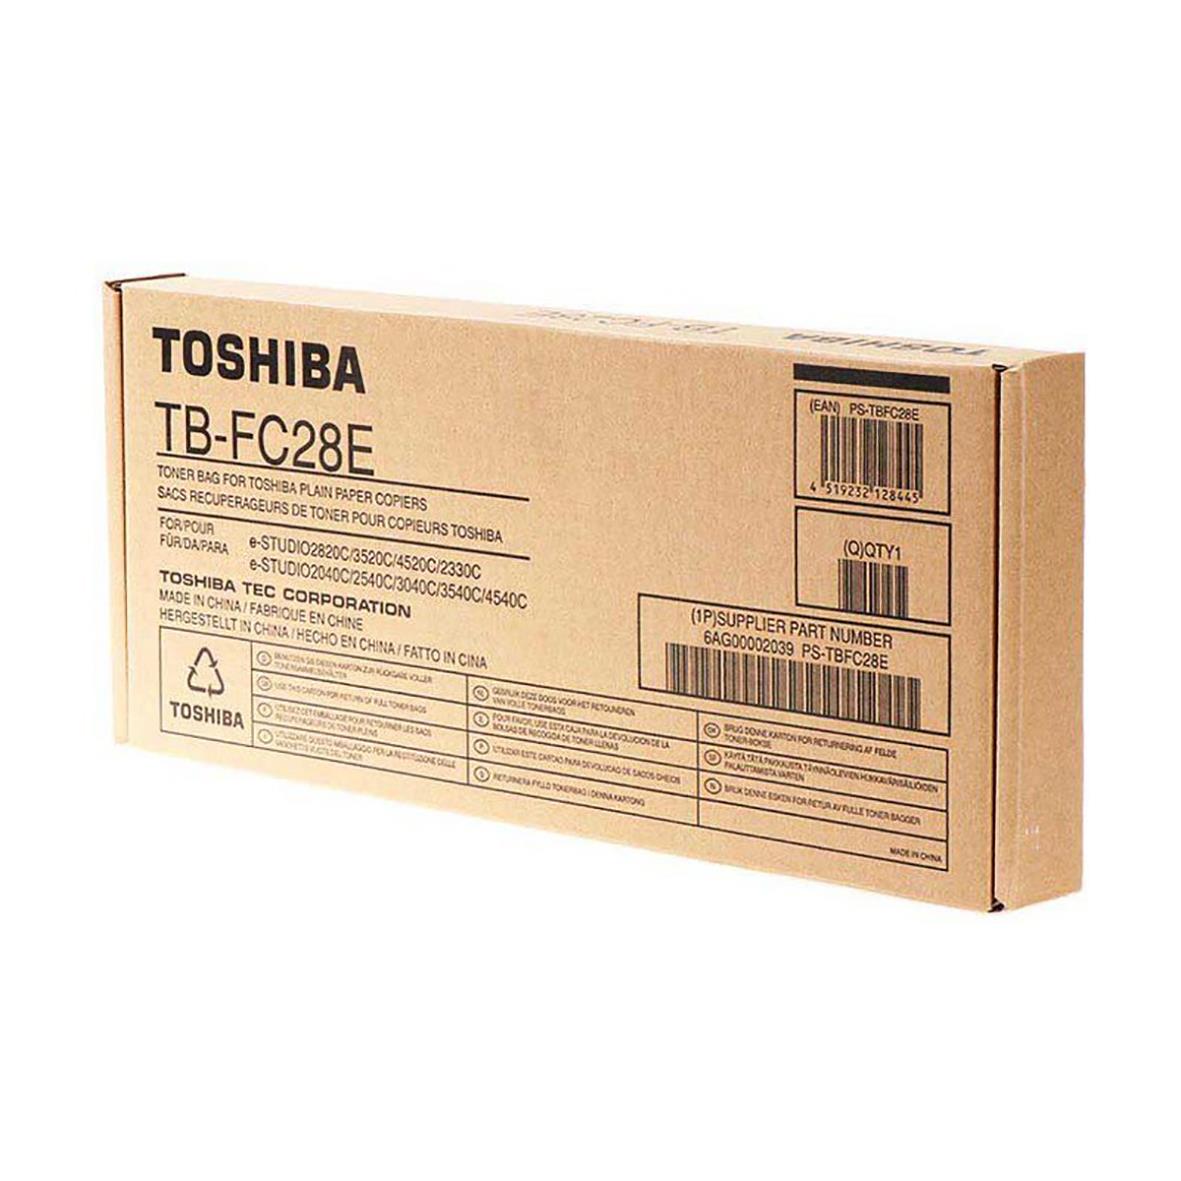 Waste toner box Toshiba TB-FC28E 6AG00002039 27041675